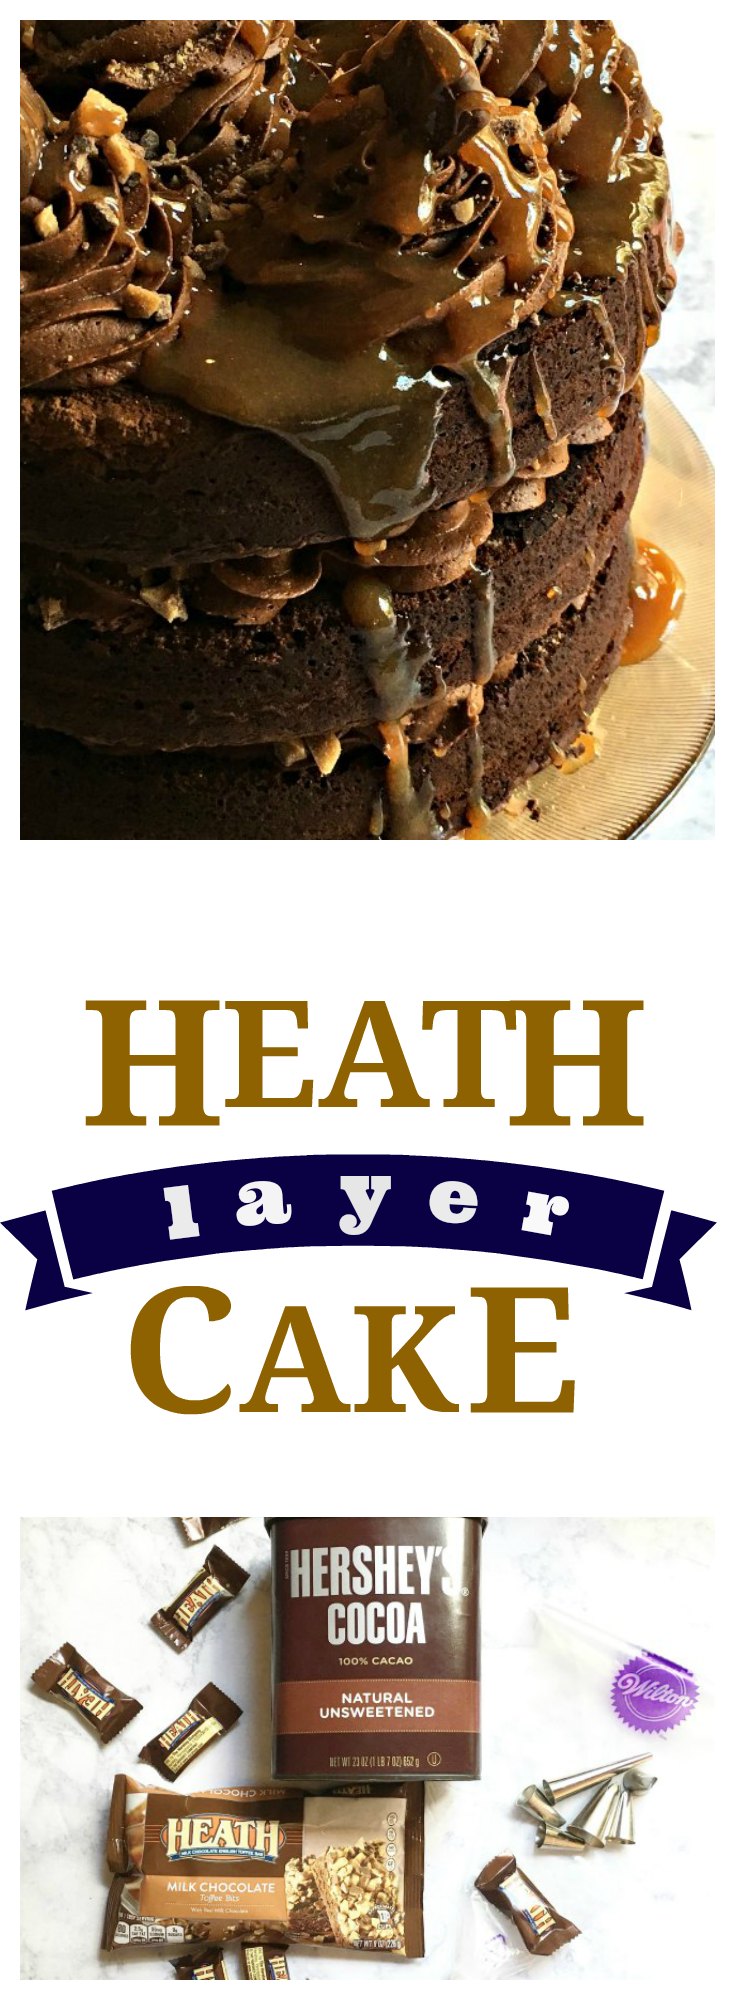 Heath Layer Cake on www.sugarbananas.com